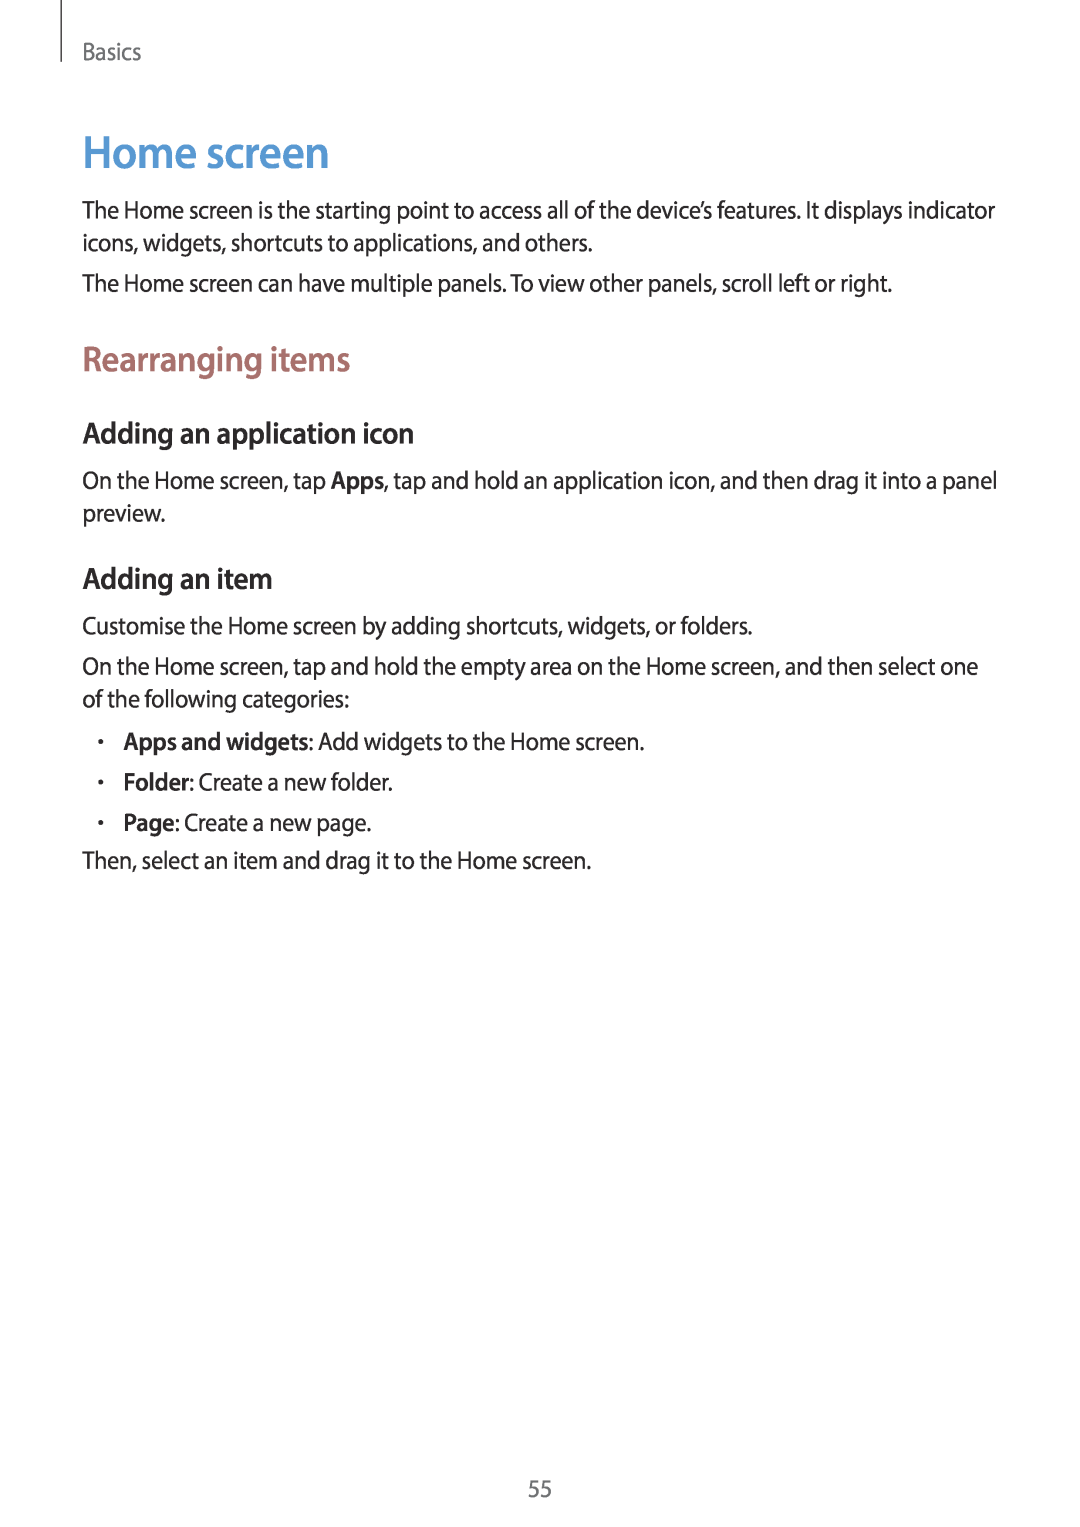 Samsung EK-GC100 user manual Home screen, Rearranging items, Adding an application icon, Adding an item, Basics 